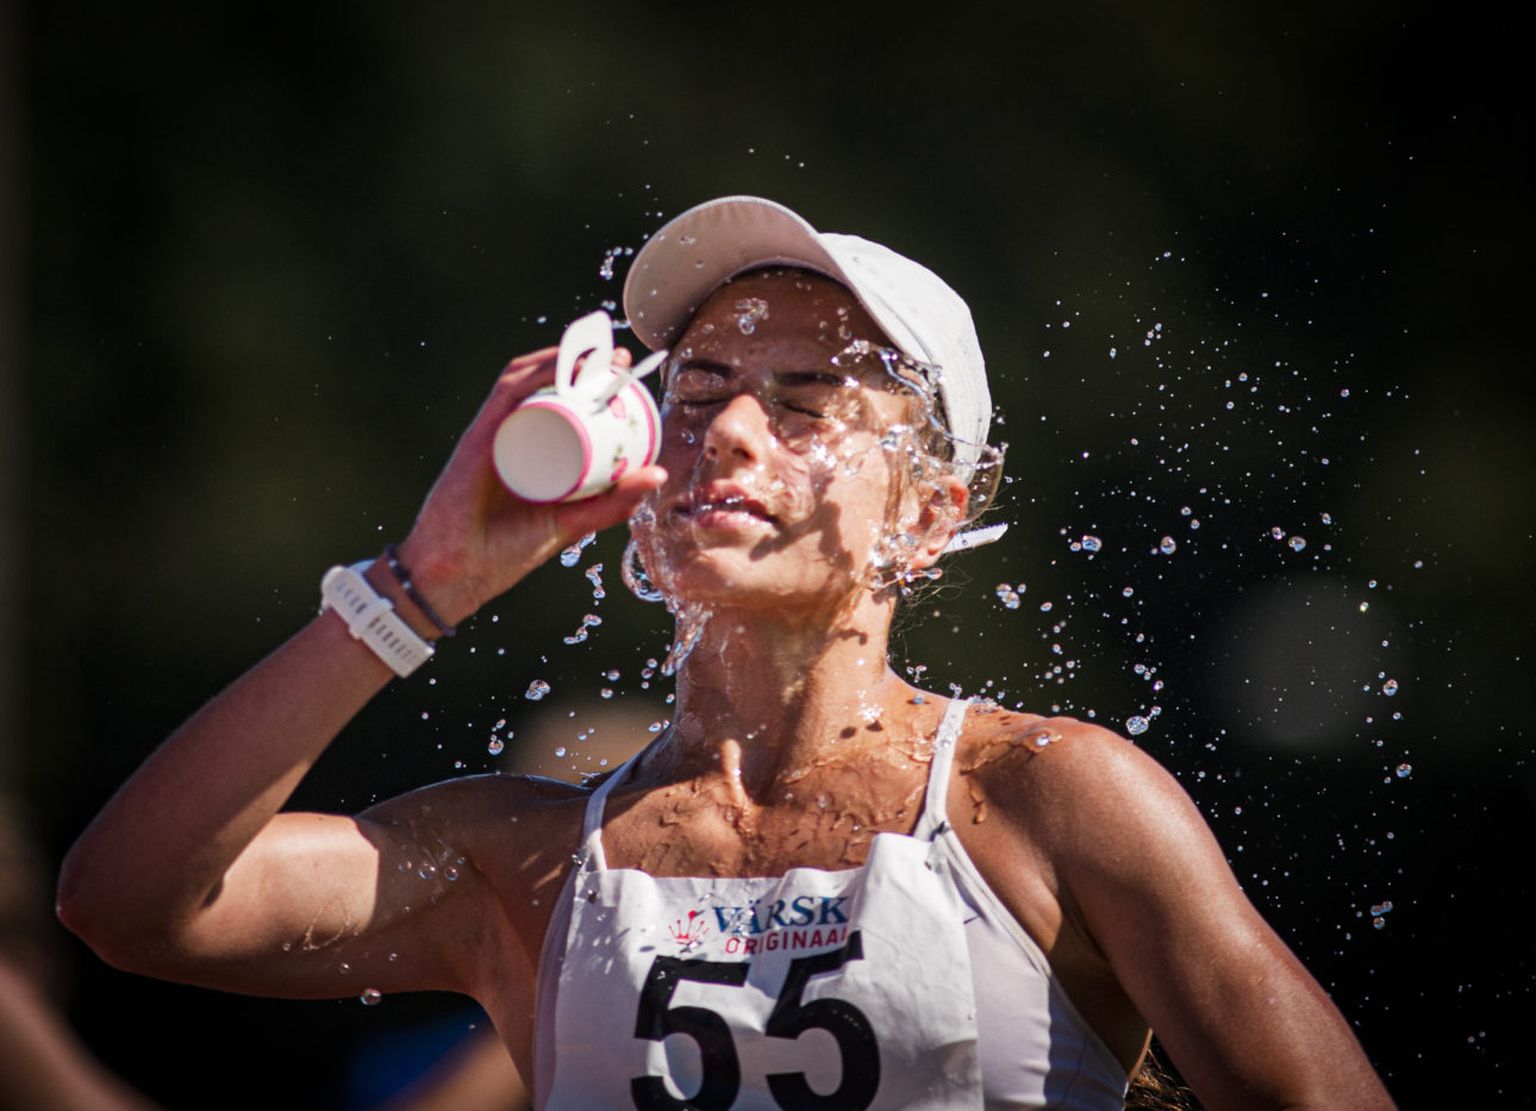 Екатерина Миротворцева установила рекорд Эстонии среди взрослых и на олимпийской дистанции - в ходьбе на 20 км.